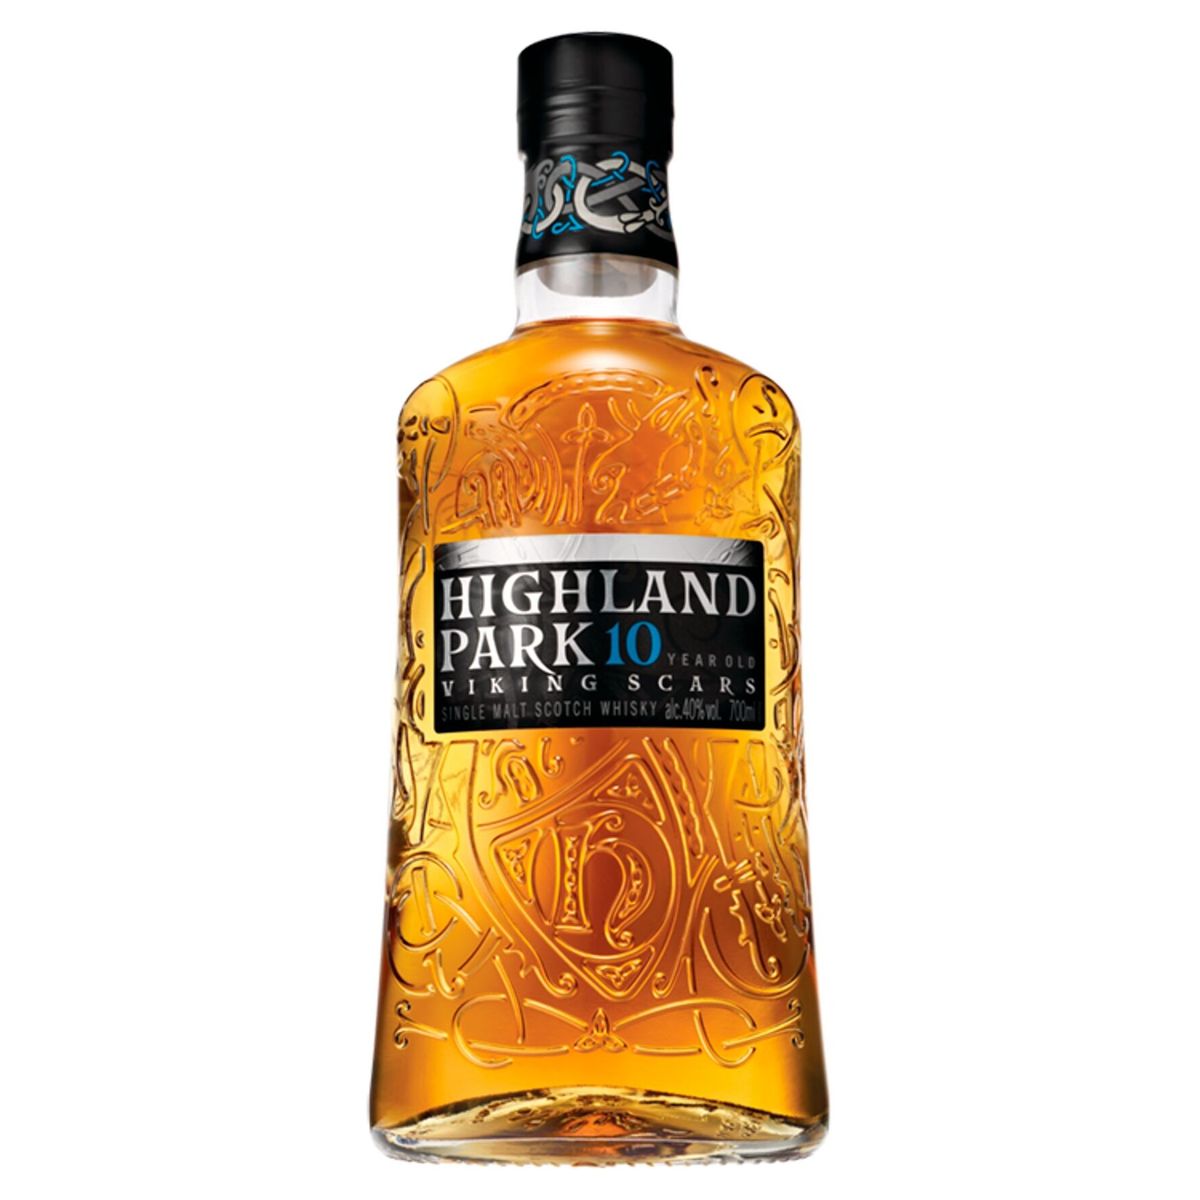 Highland Park 10 Year Old Viking Scars Single Malt Scotch Whisky 700ml